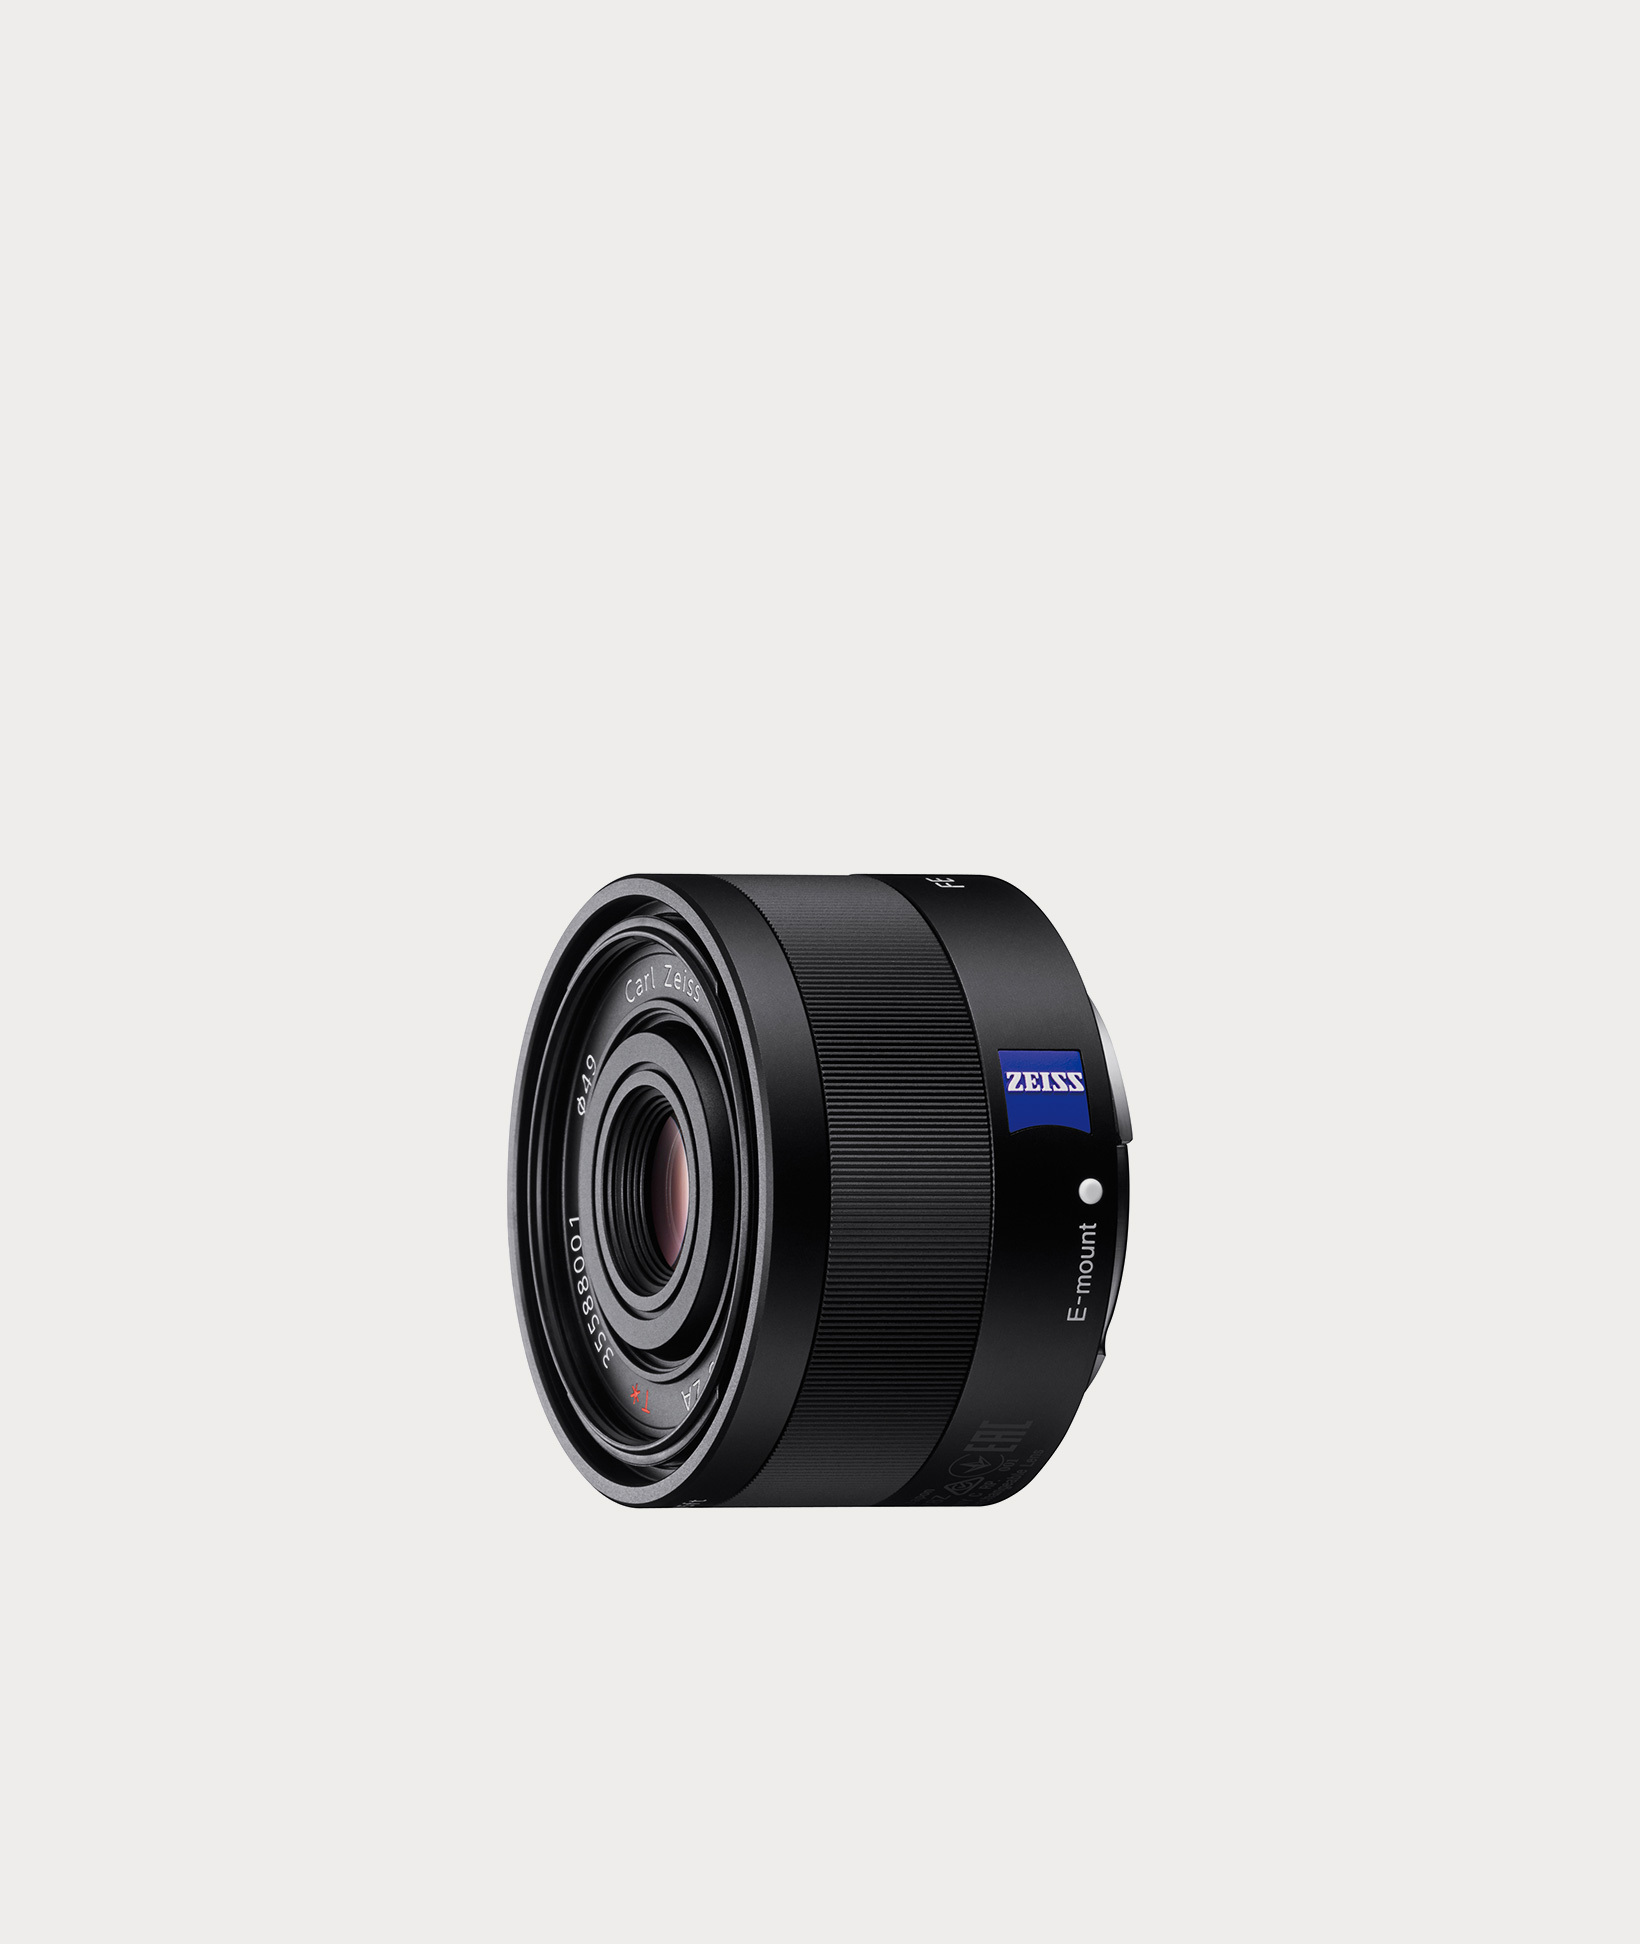 Sony Sonnar T* FE 35mm f/2.8 Lens (SEL35F28Z)